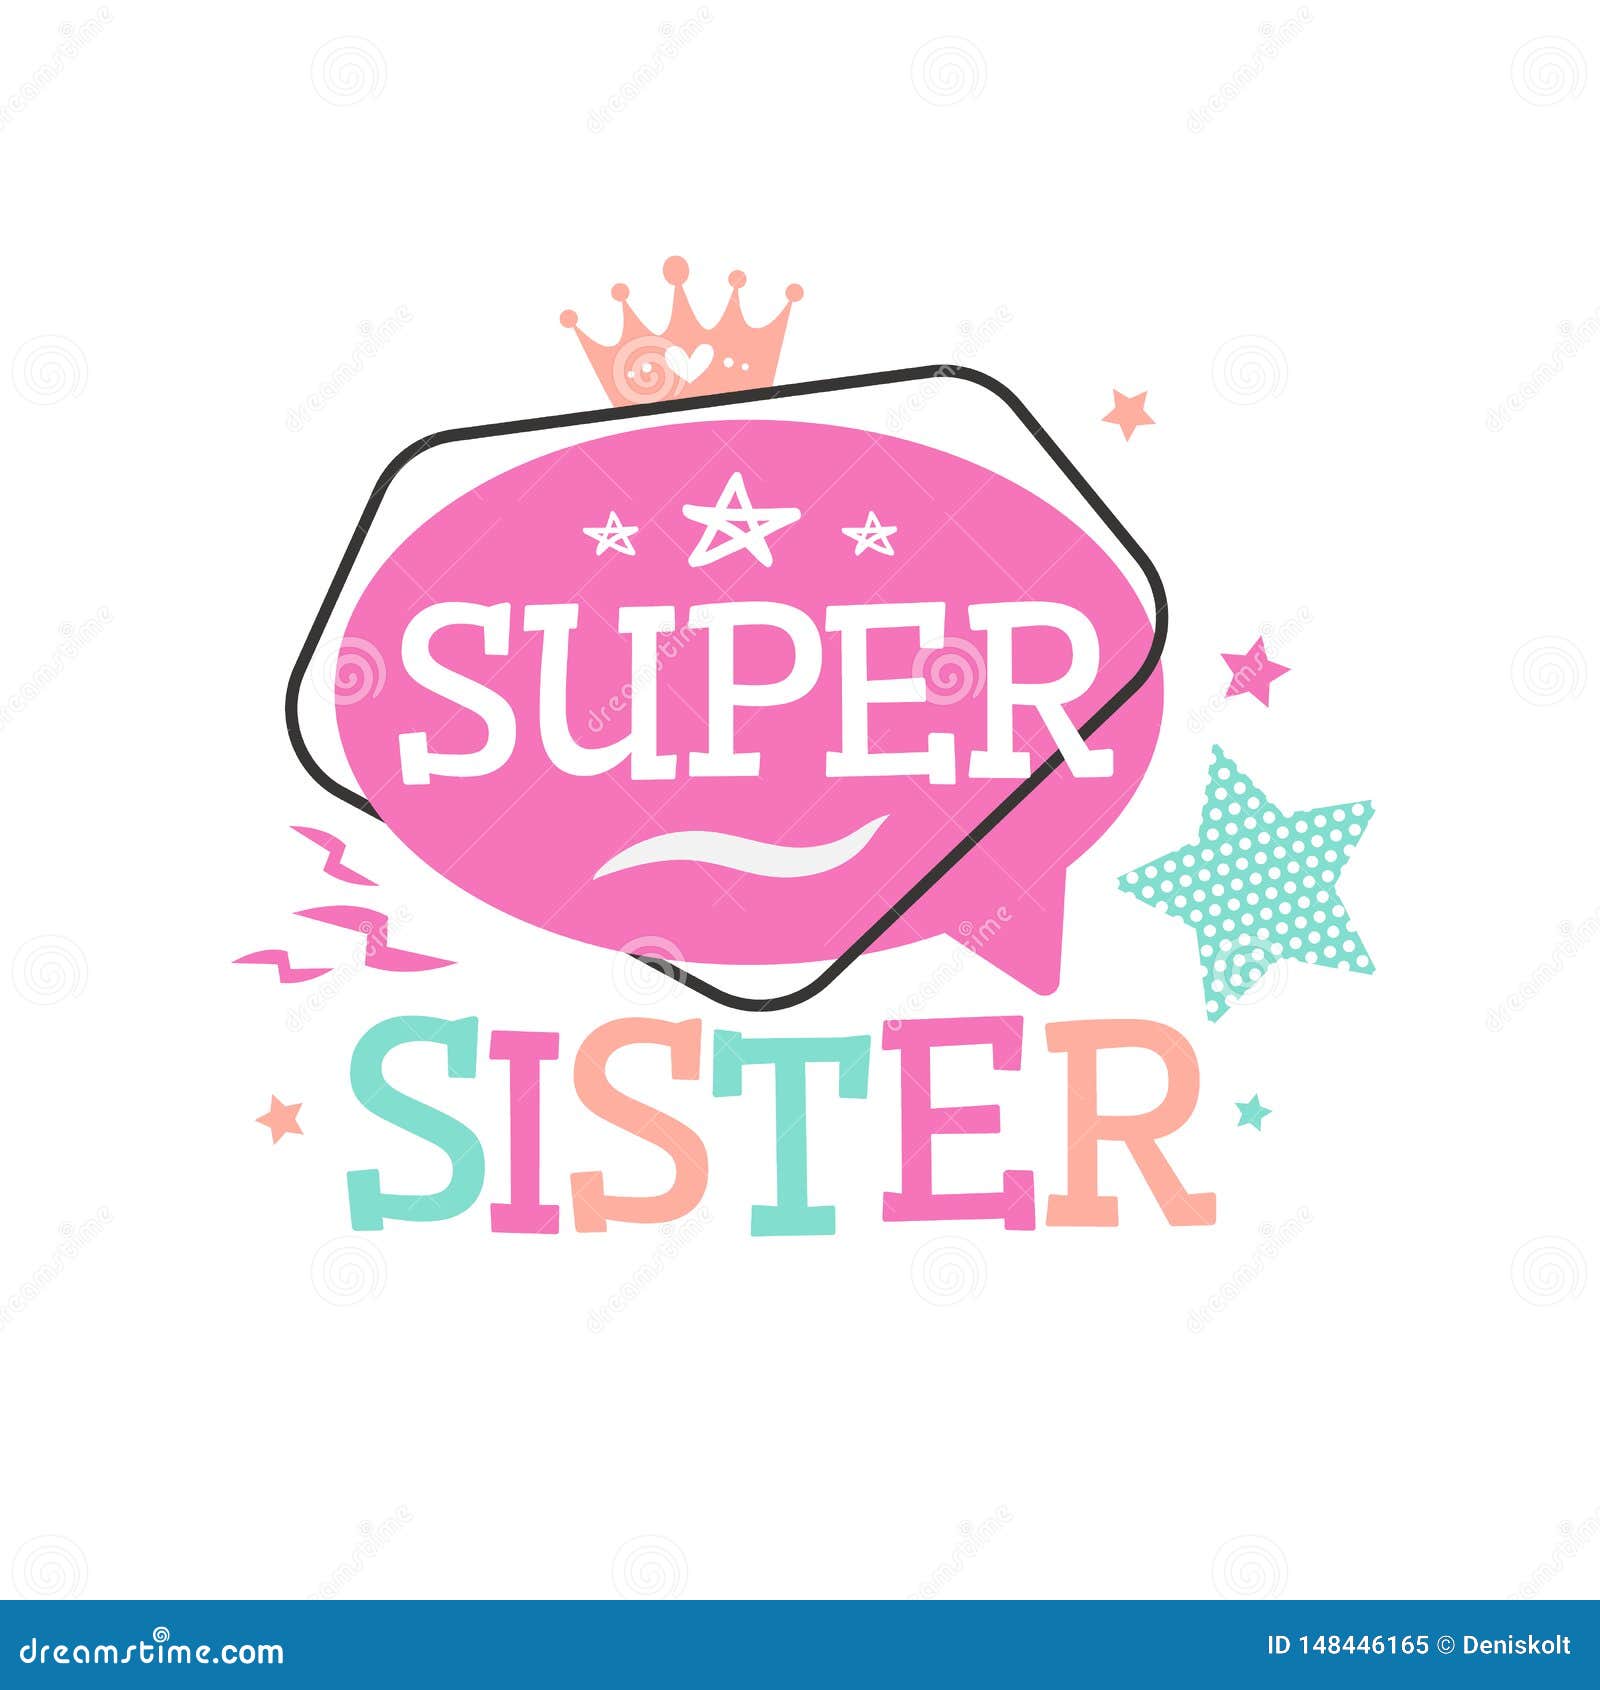 Nippybox sister. Систер. Супер систер. Систер ты супер картинки. Логотип sisters.